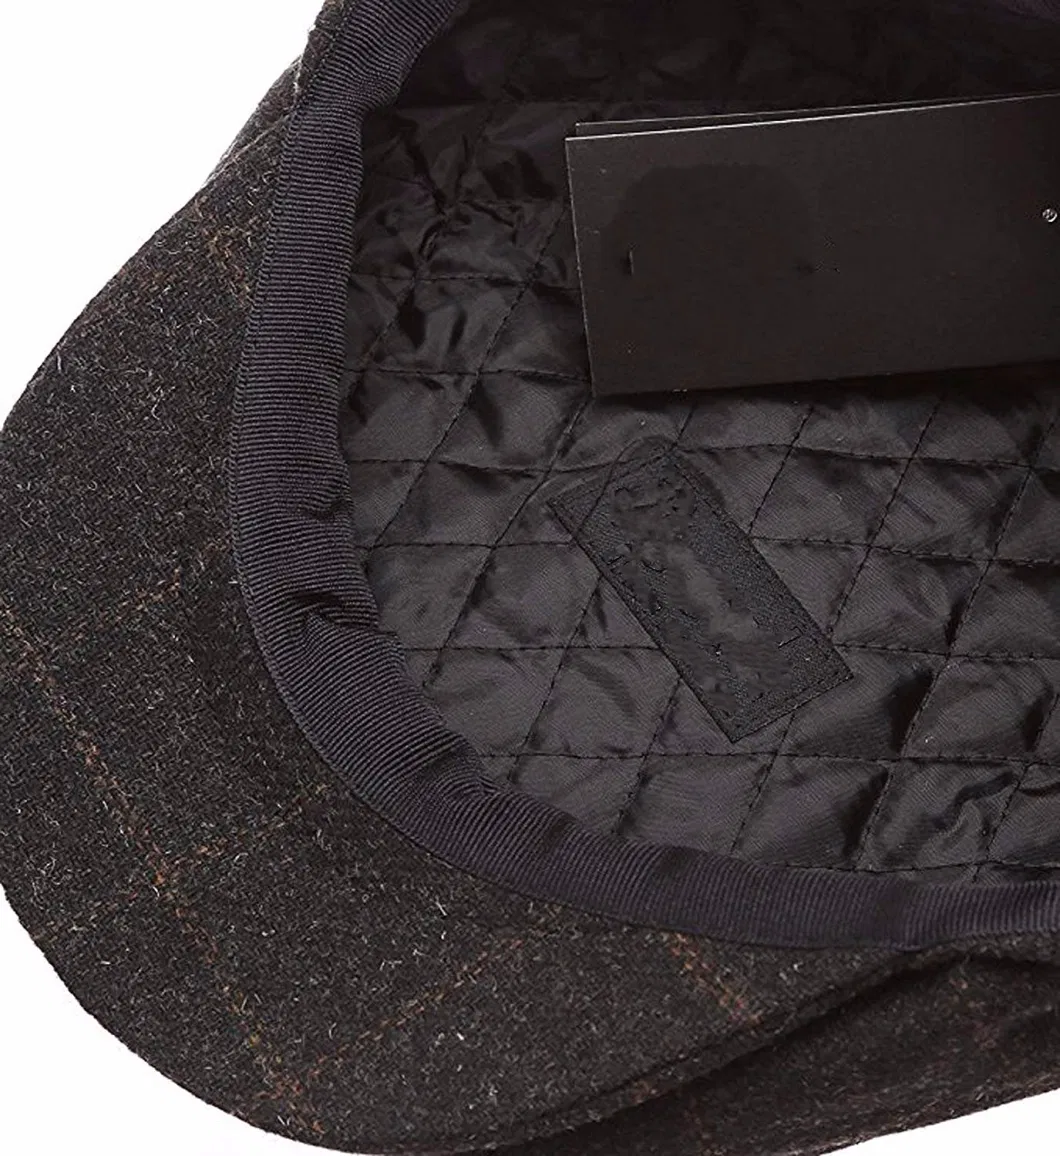 Custom Classic 8 Panel Wool Blend Newsboy Snap Brim Collection Beret Formal Hat All Matching Beret